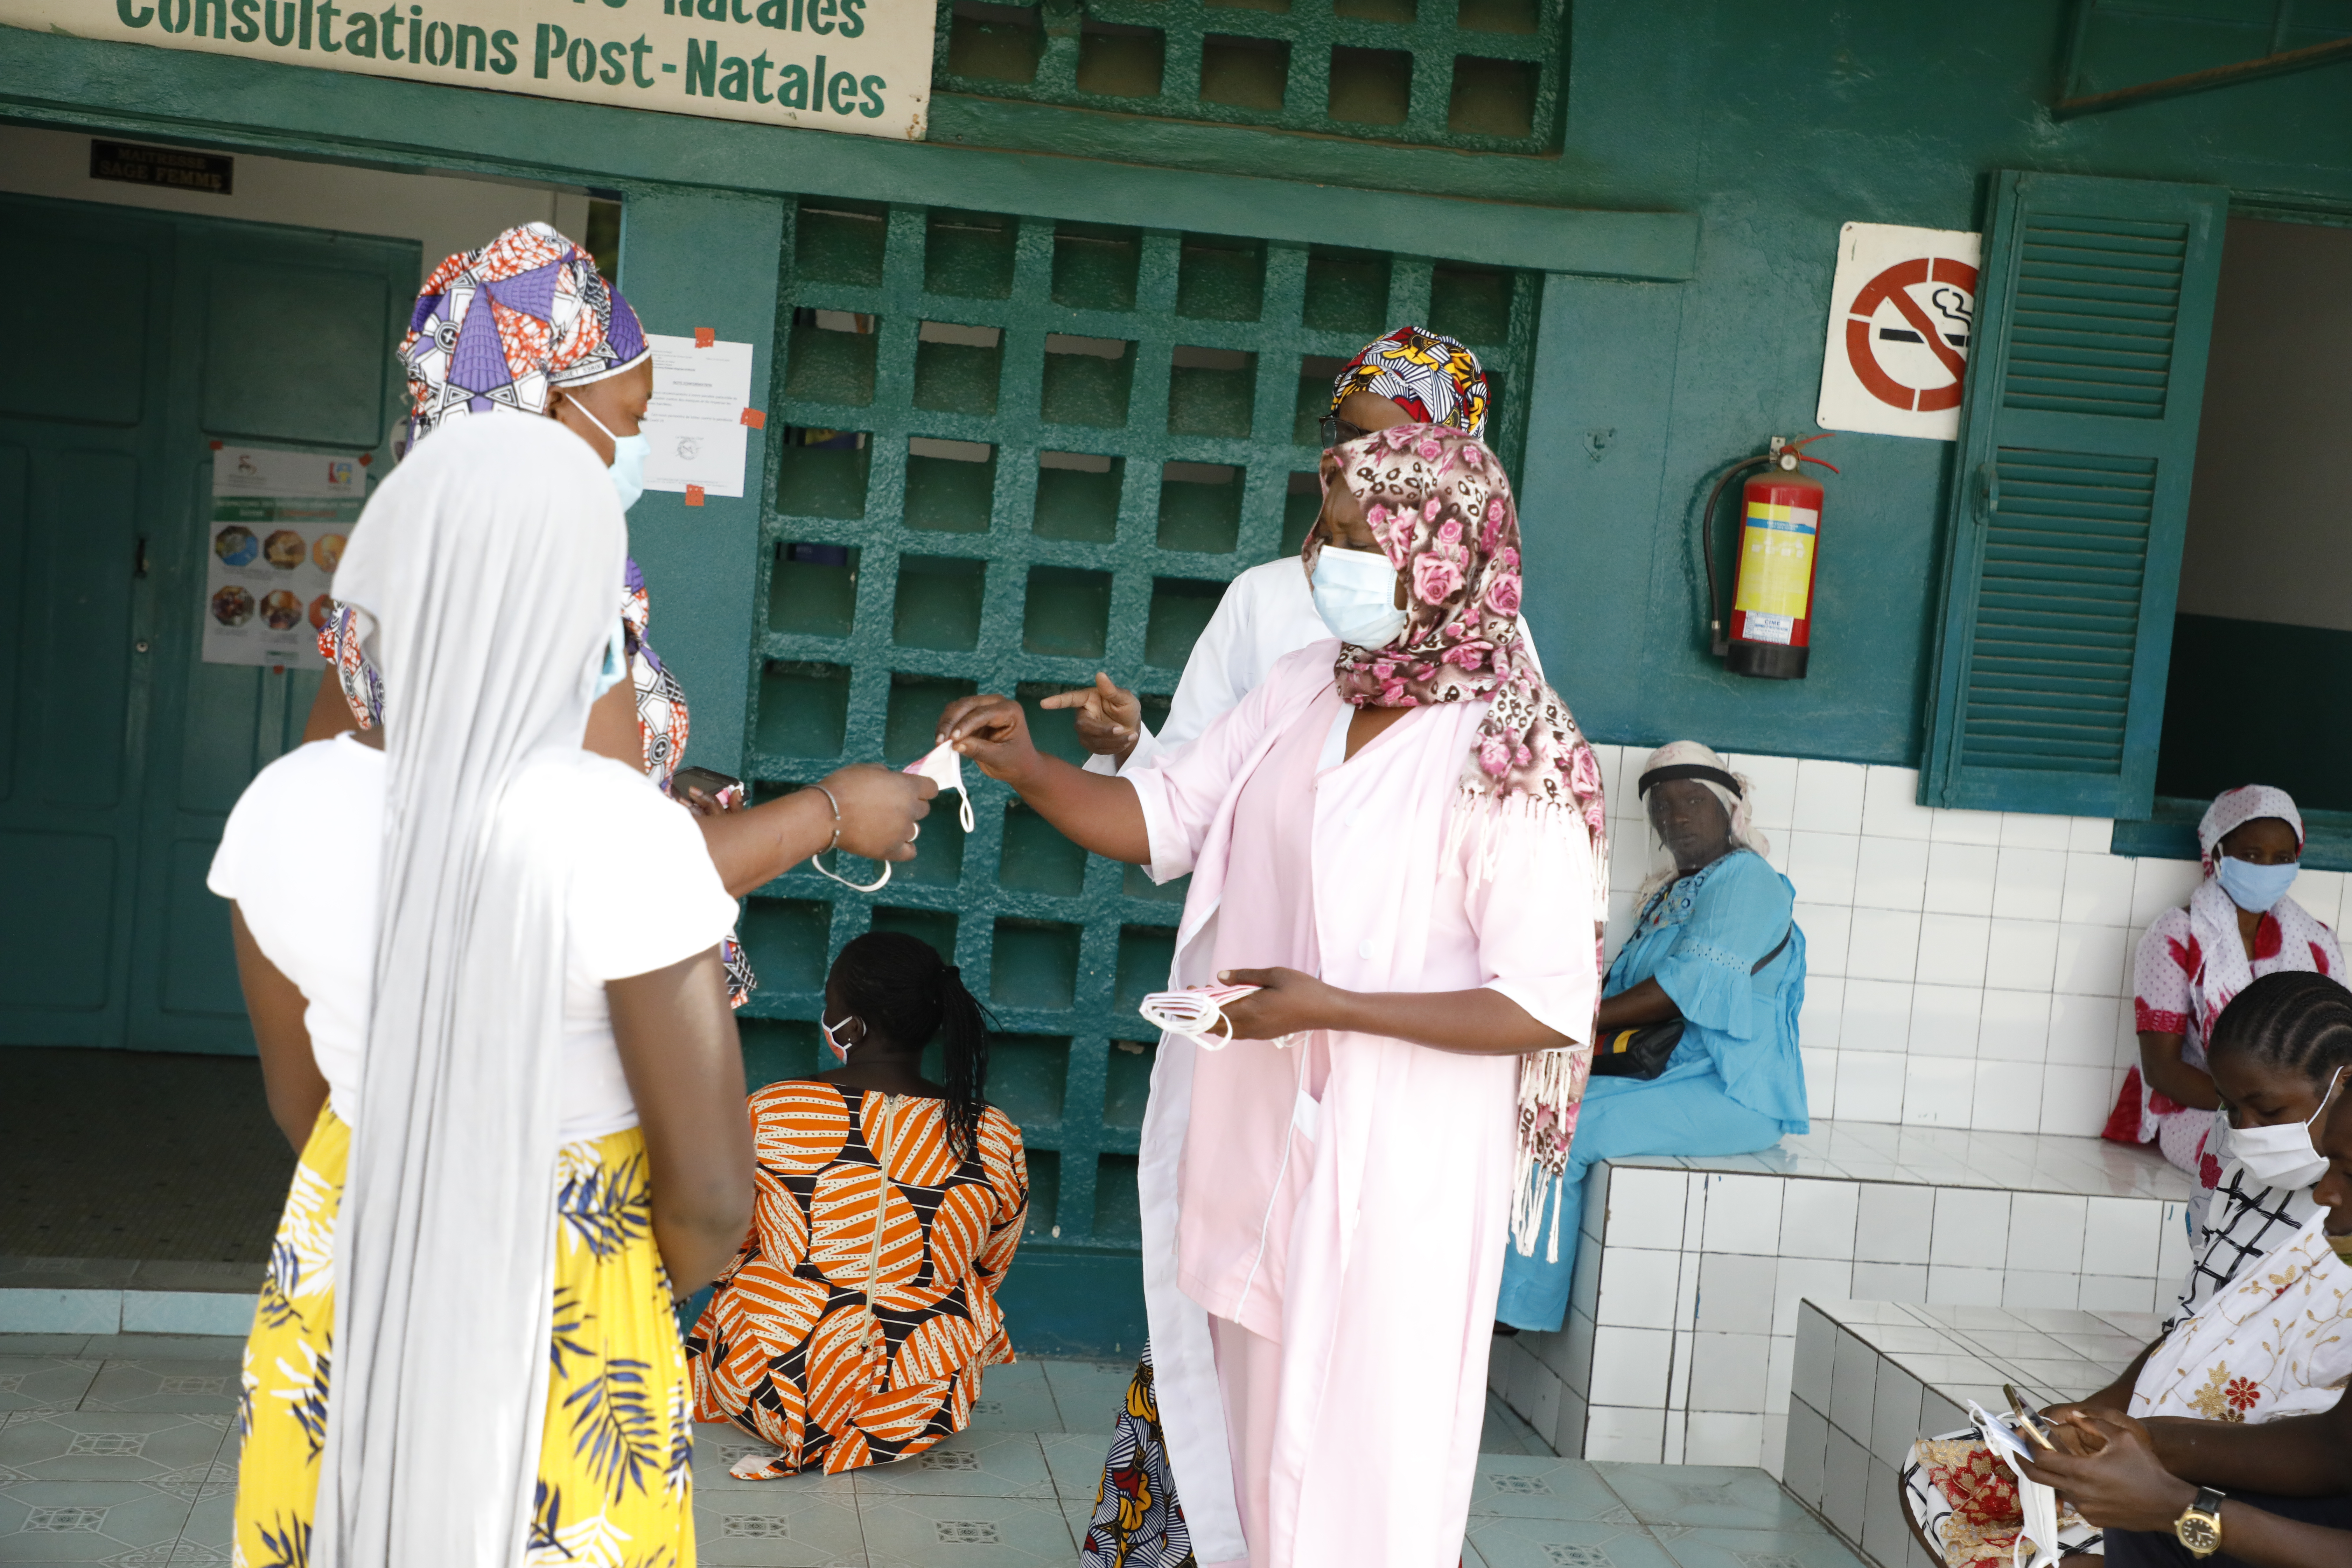 Maternity nurses at the Philippe Maguilen Senghor hospital center distribute fabric masks provided by UN Women. Photo credit: Khadidiatou Ndiaye / UN Women WCARO